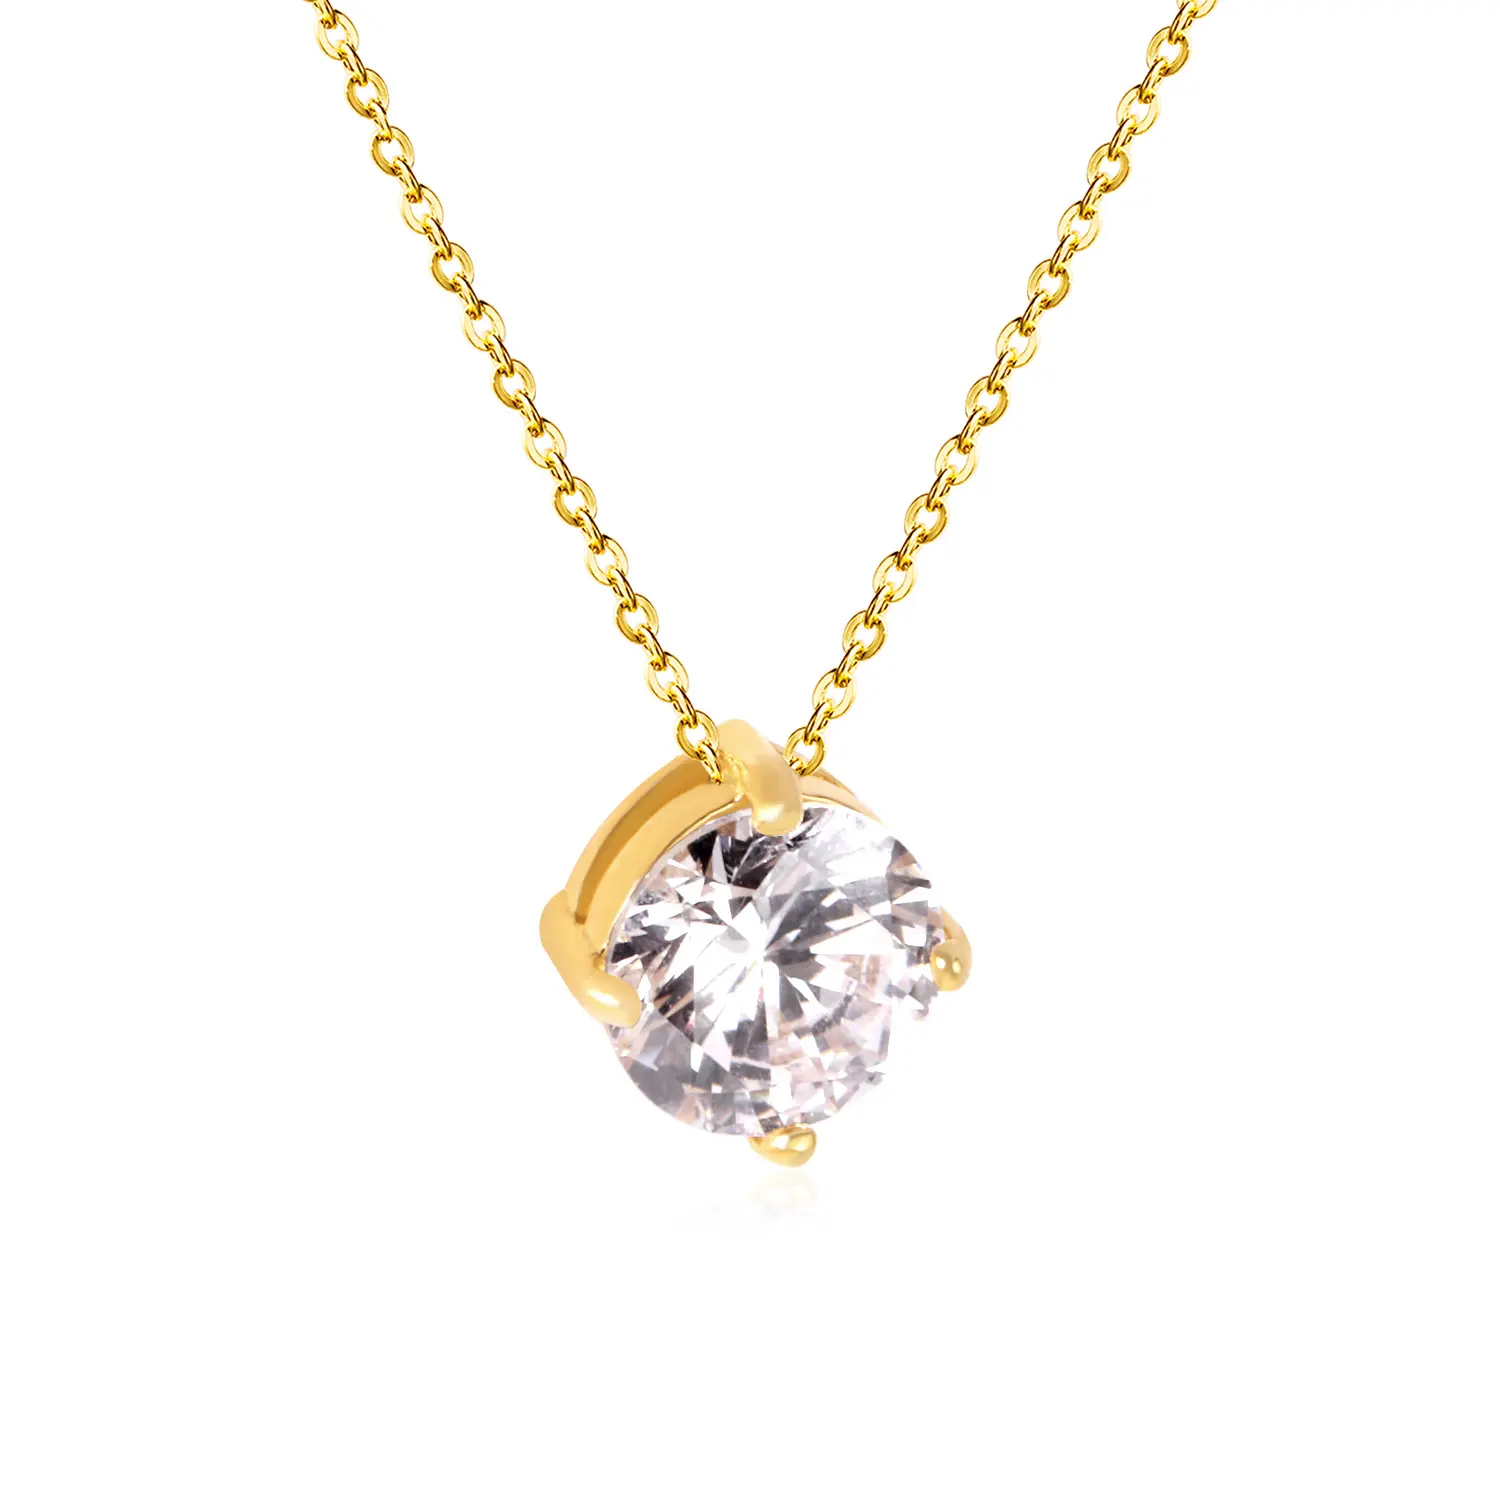 Liontin Kristal Zirkon Kubik Wanita, Kalung Rantai Perhiasan Merek Baja Tahan Karat Emas dan Perak